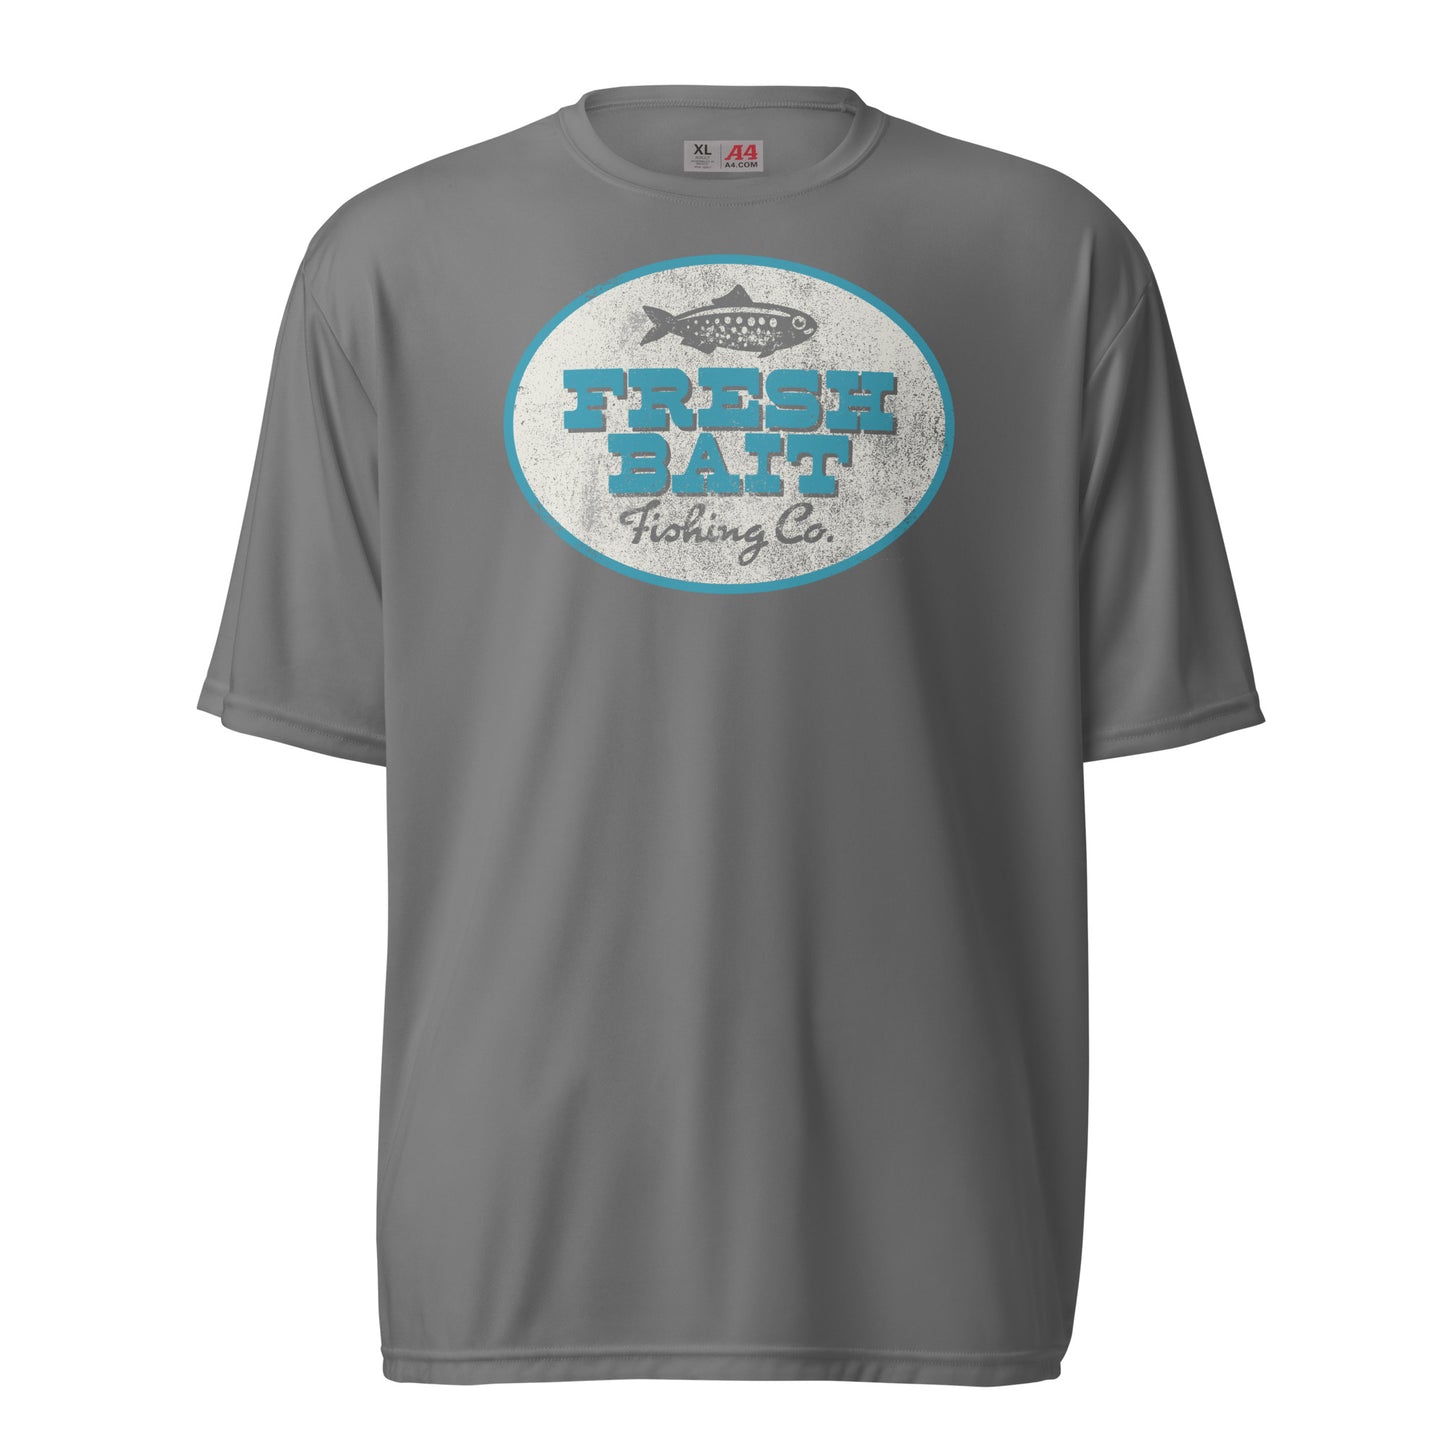 Fresh Bait Fishing Co. Logo T - Blue & White performance crew neck t-shirt